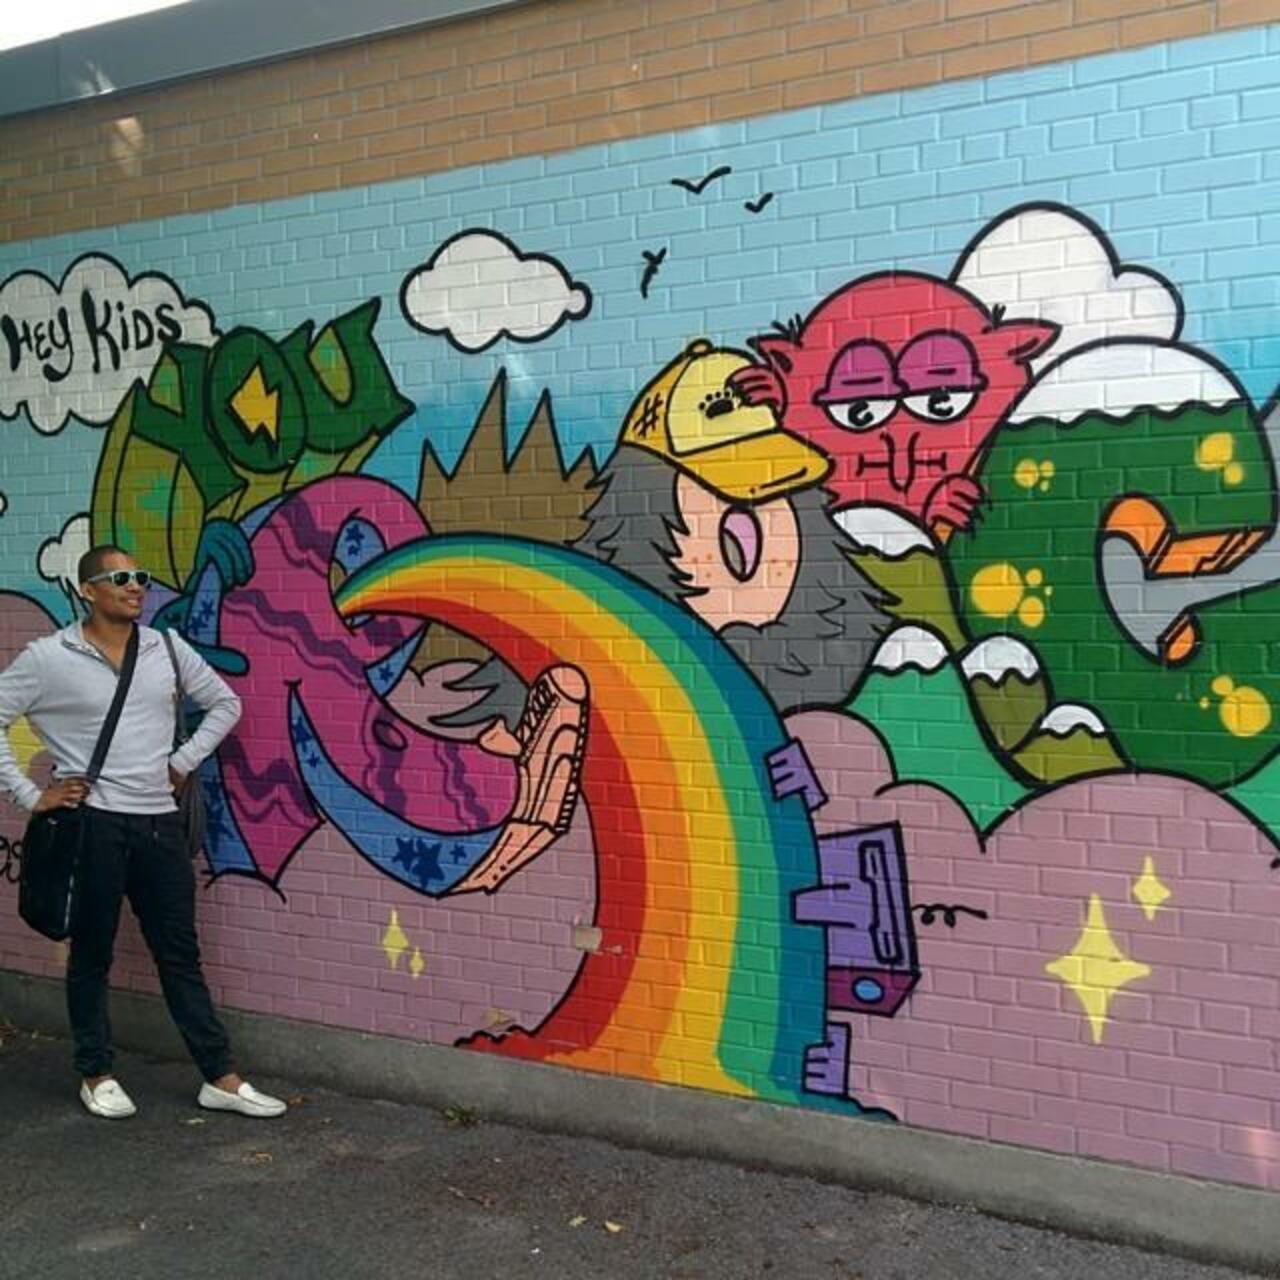 Hey #kids you #rock ...#Toronto #graffiti #wallart #mural #paint #painting #art #artist #rainbow #gvo #goodvibeso... http://t.co/5xsT4Sy6eS